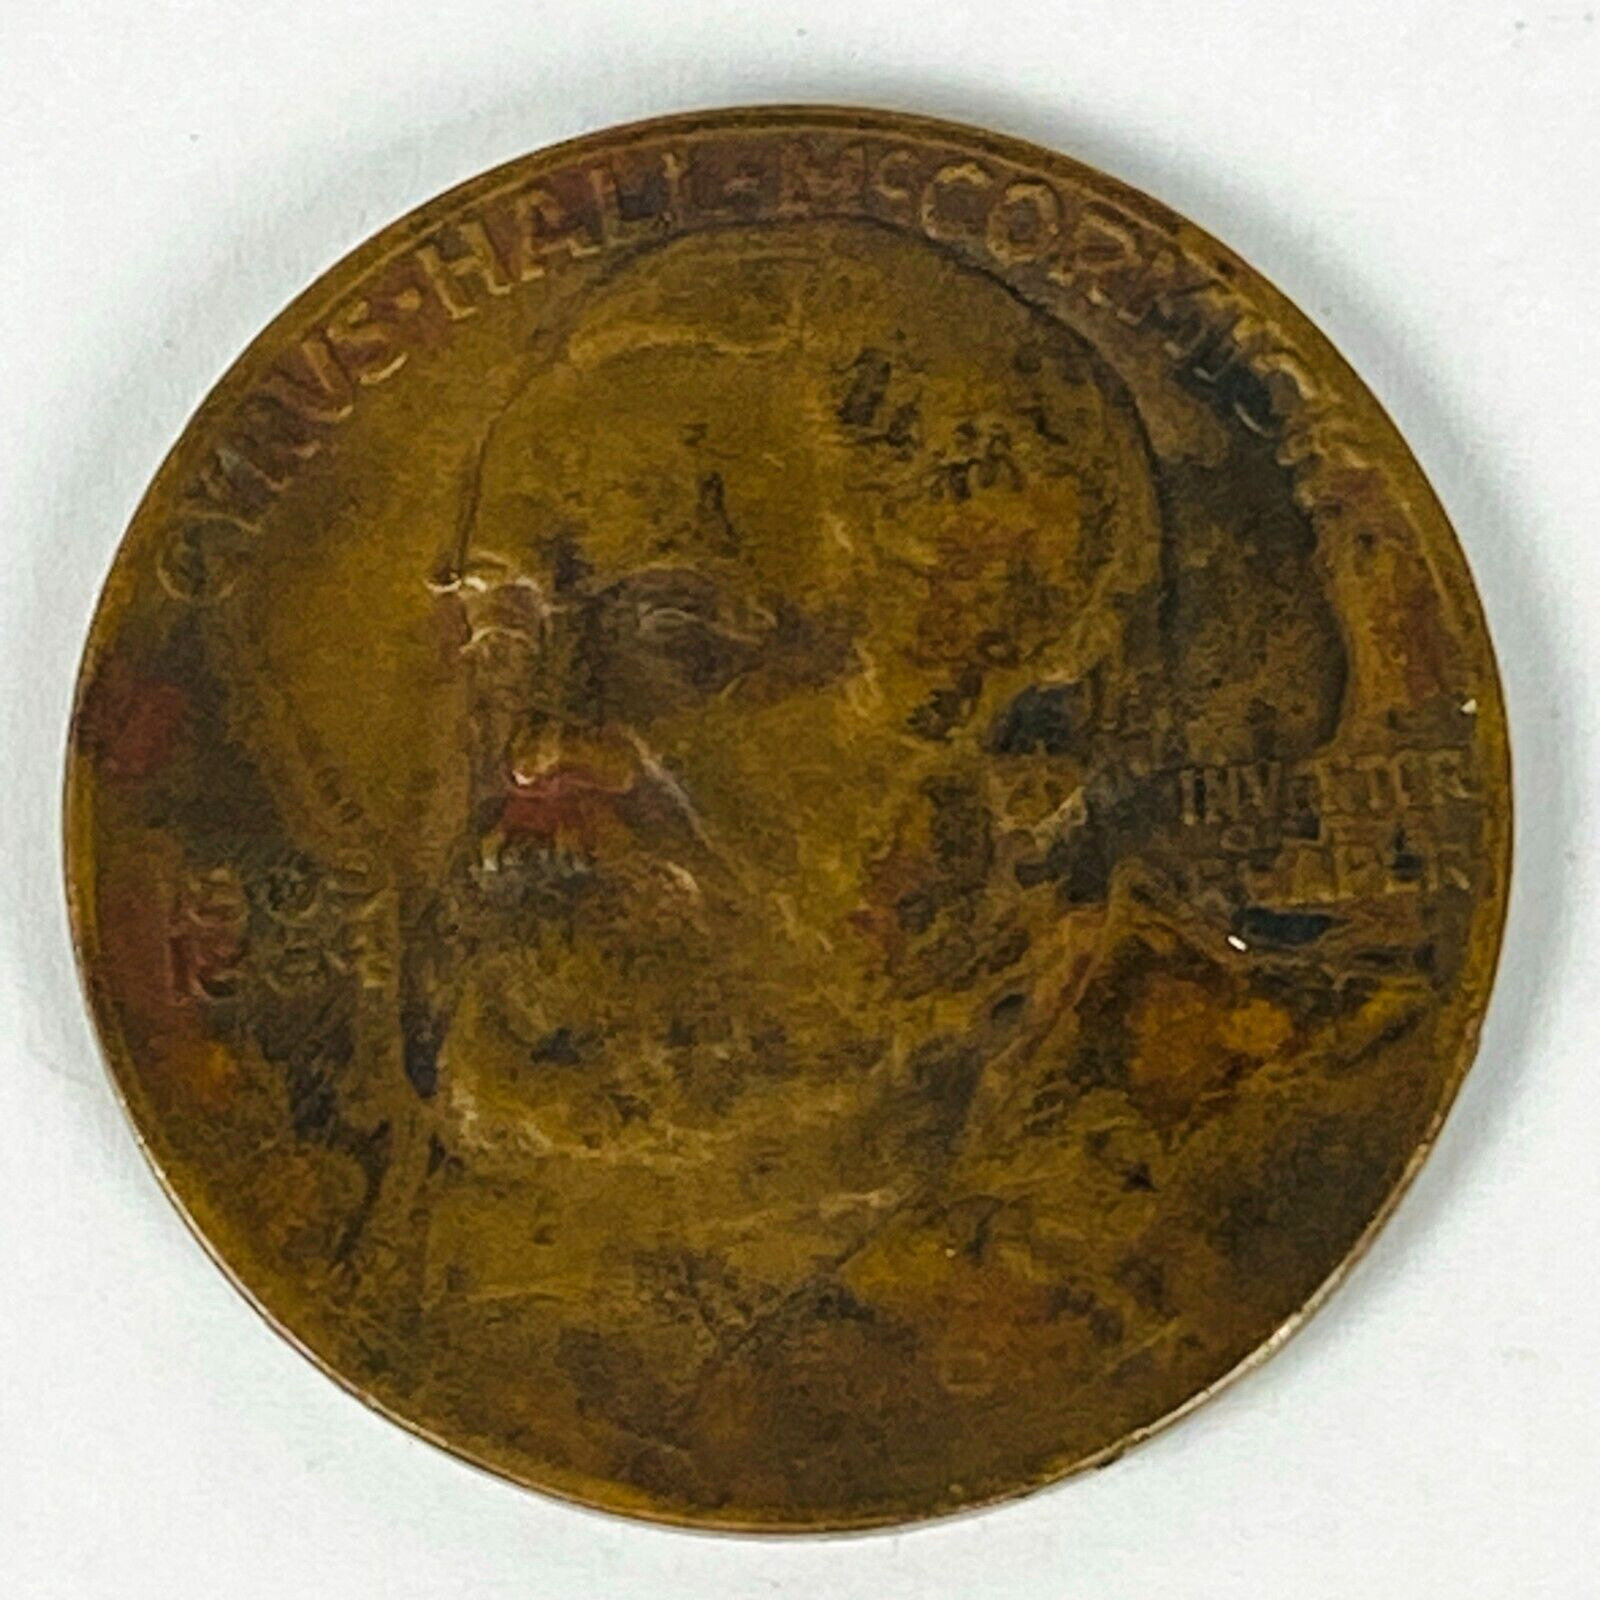 1931 International Harvester Company Cyrus Hall McCormick Round Token Coin 